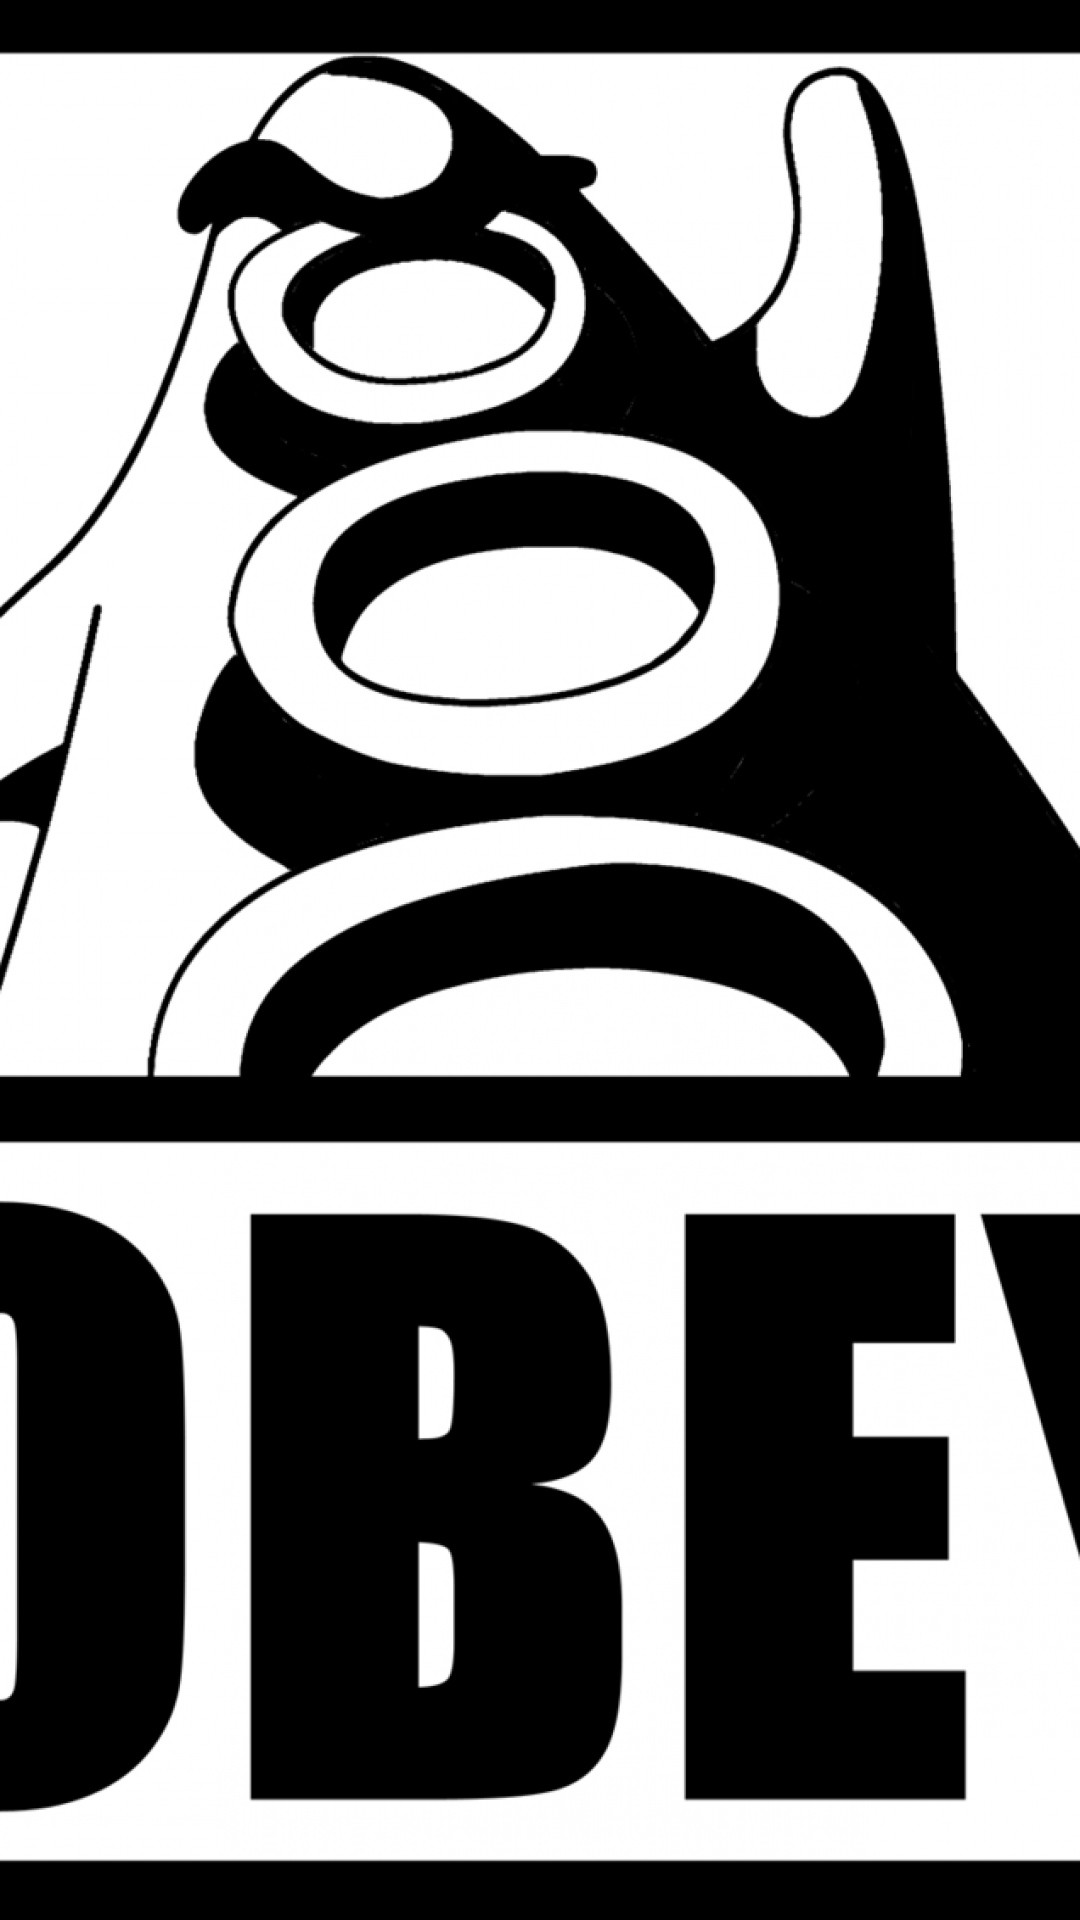 obey logo wallpaper hd